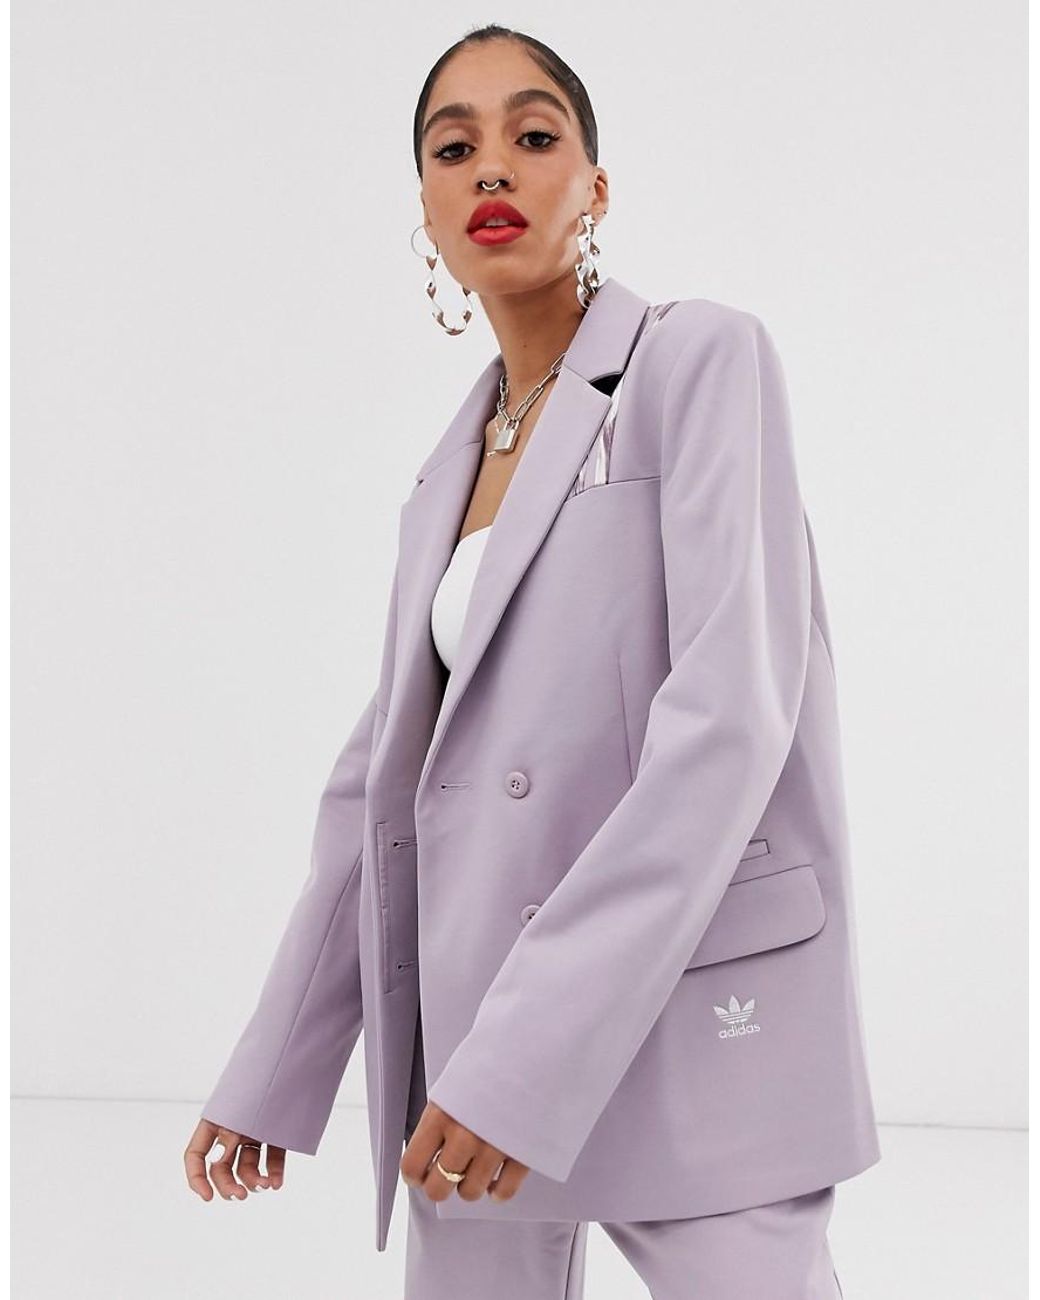 adidas Originals X Danielle Cathari Deconstructed Blazer In Soft Vision in  Purple | Lyst